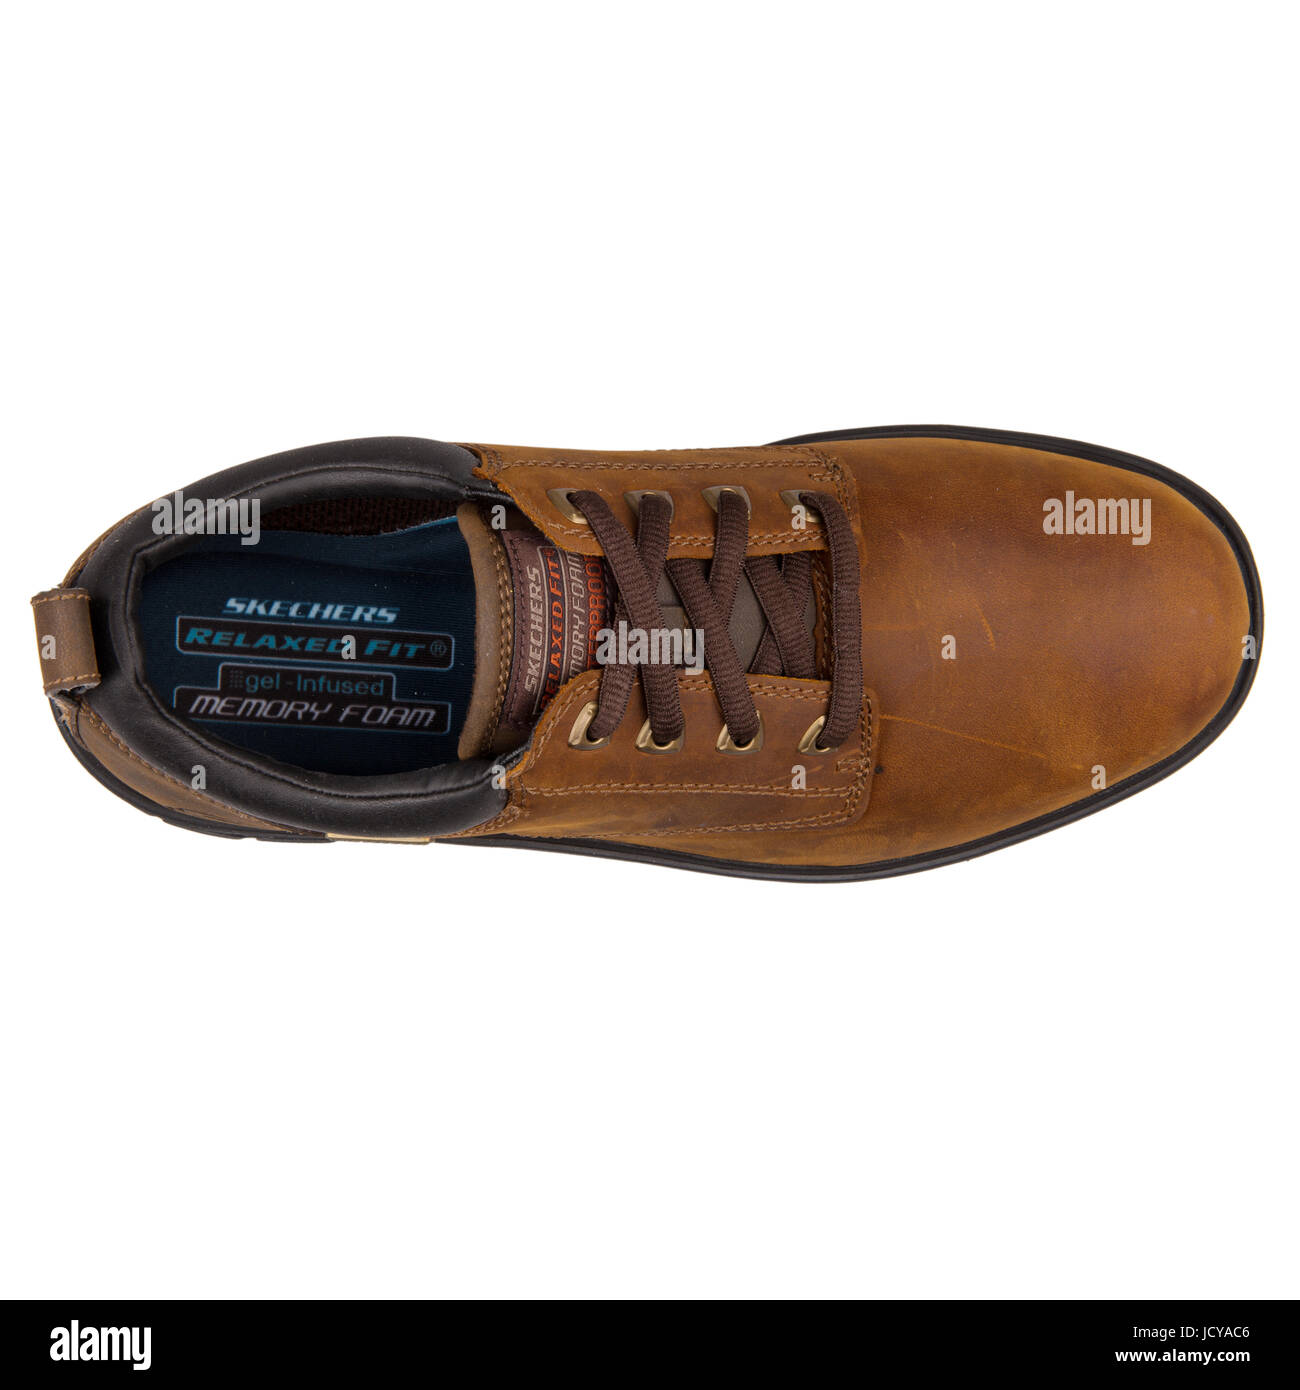 Skechers Segment Bertan Chocolate Leather Men's Casual Shoes - 64517-CHOC  Stock Photo - Alamy